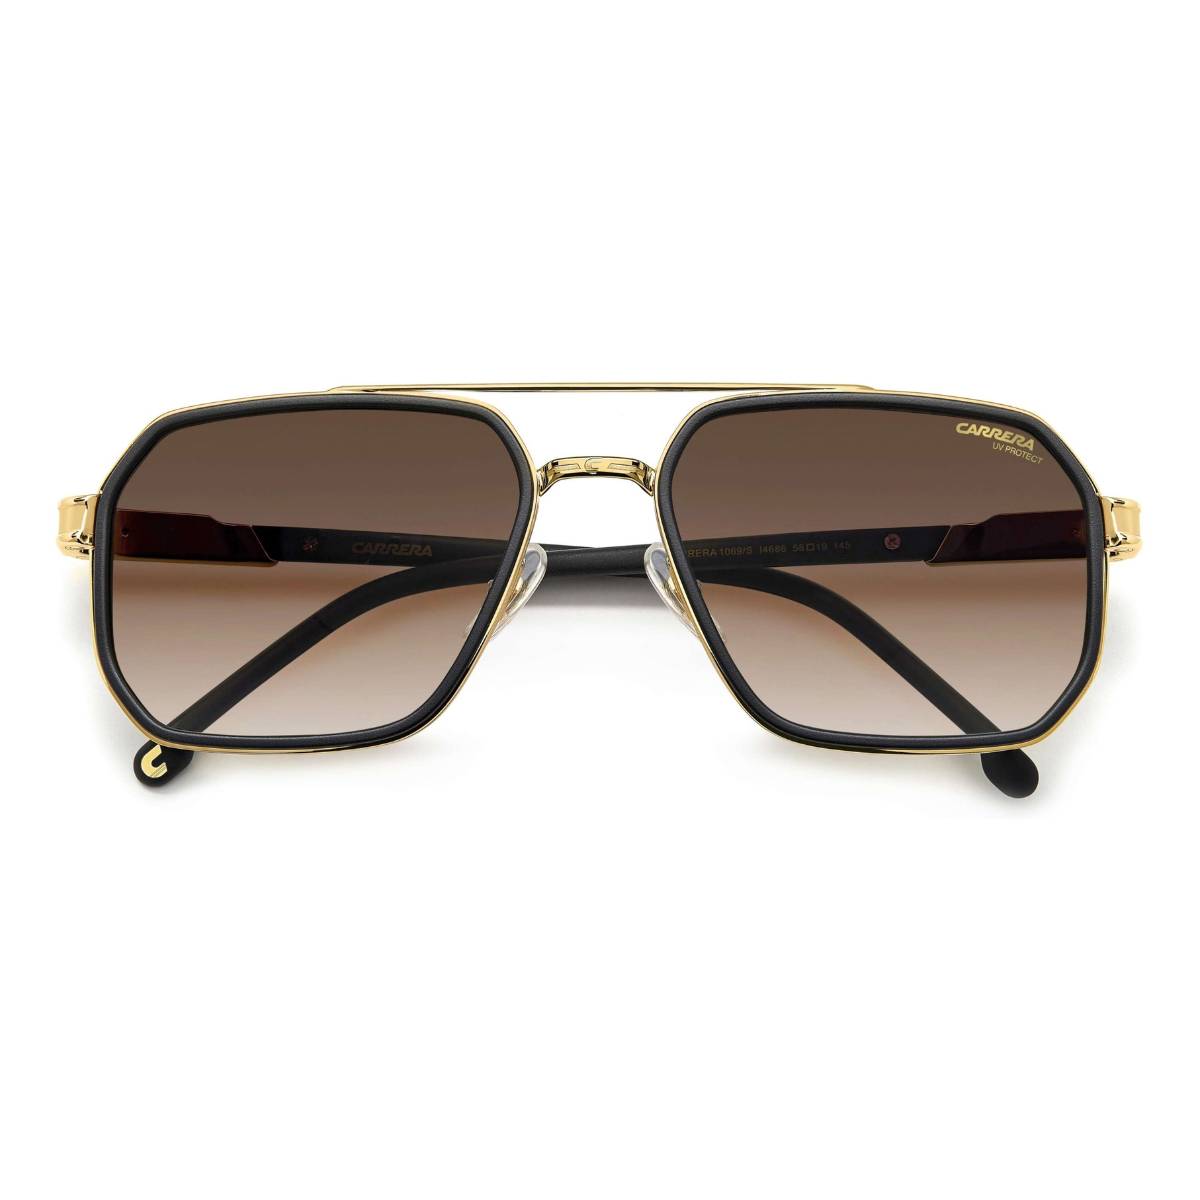 "Buy trendy men's square sunglasses form carrera | Opatorium"